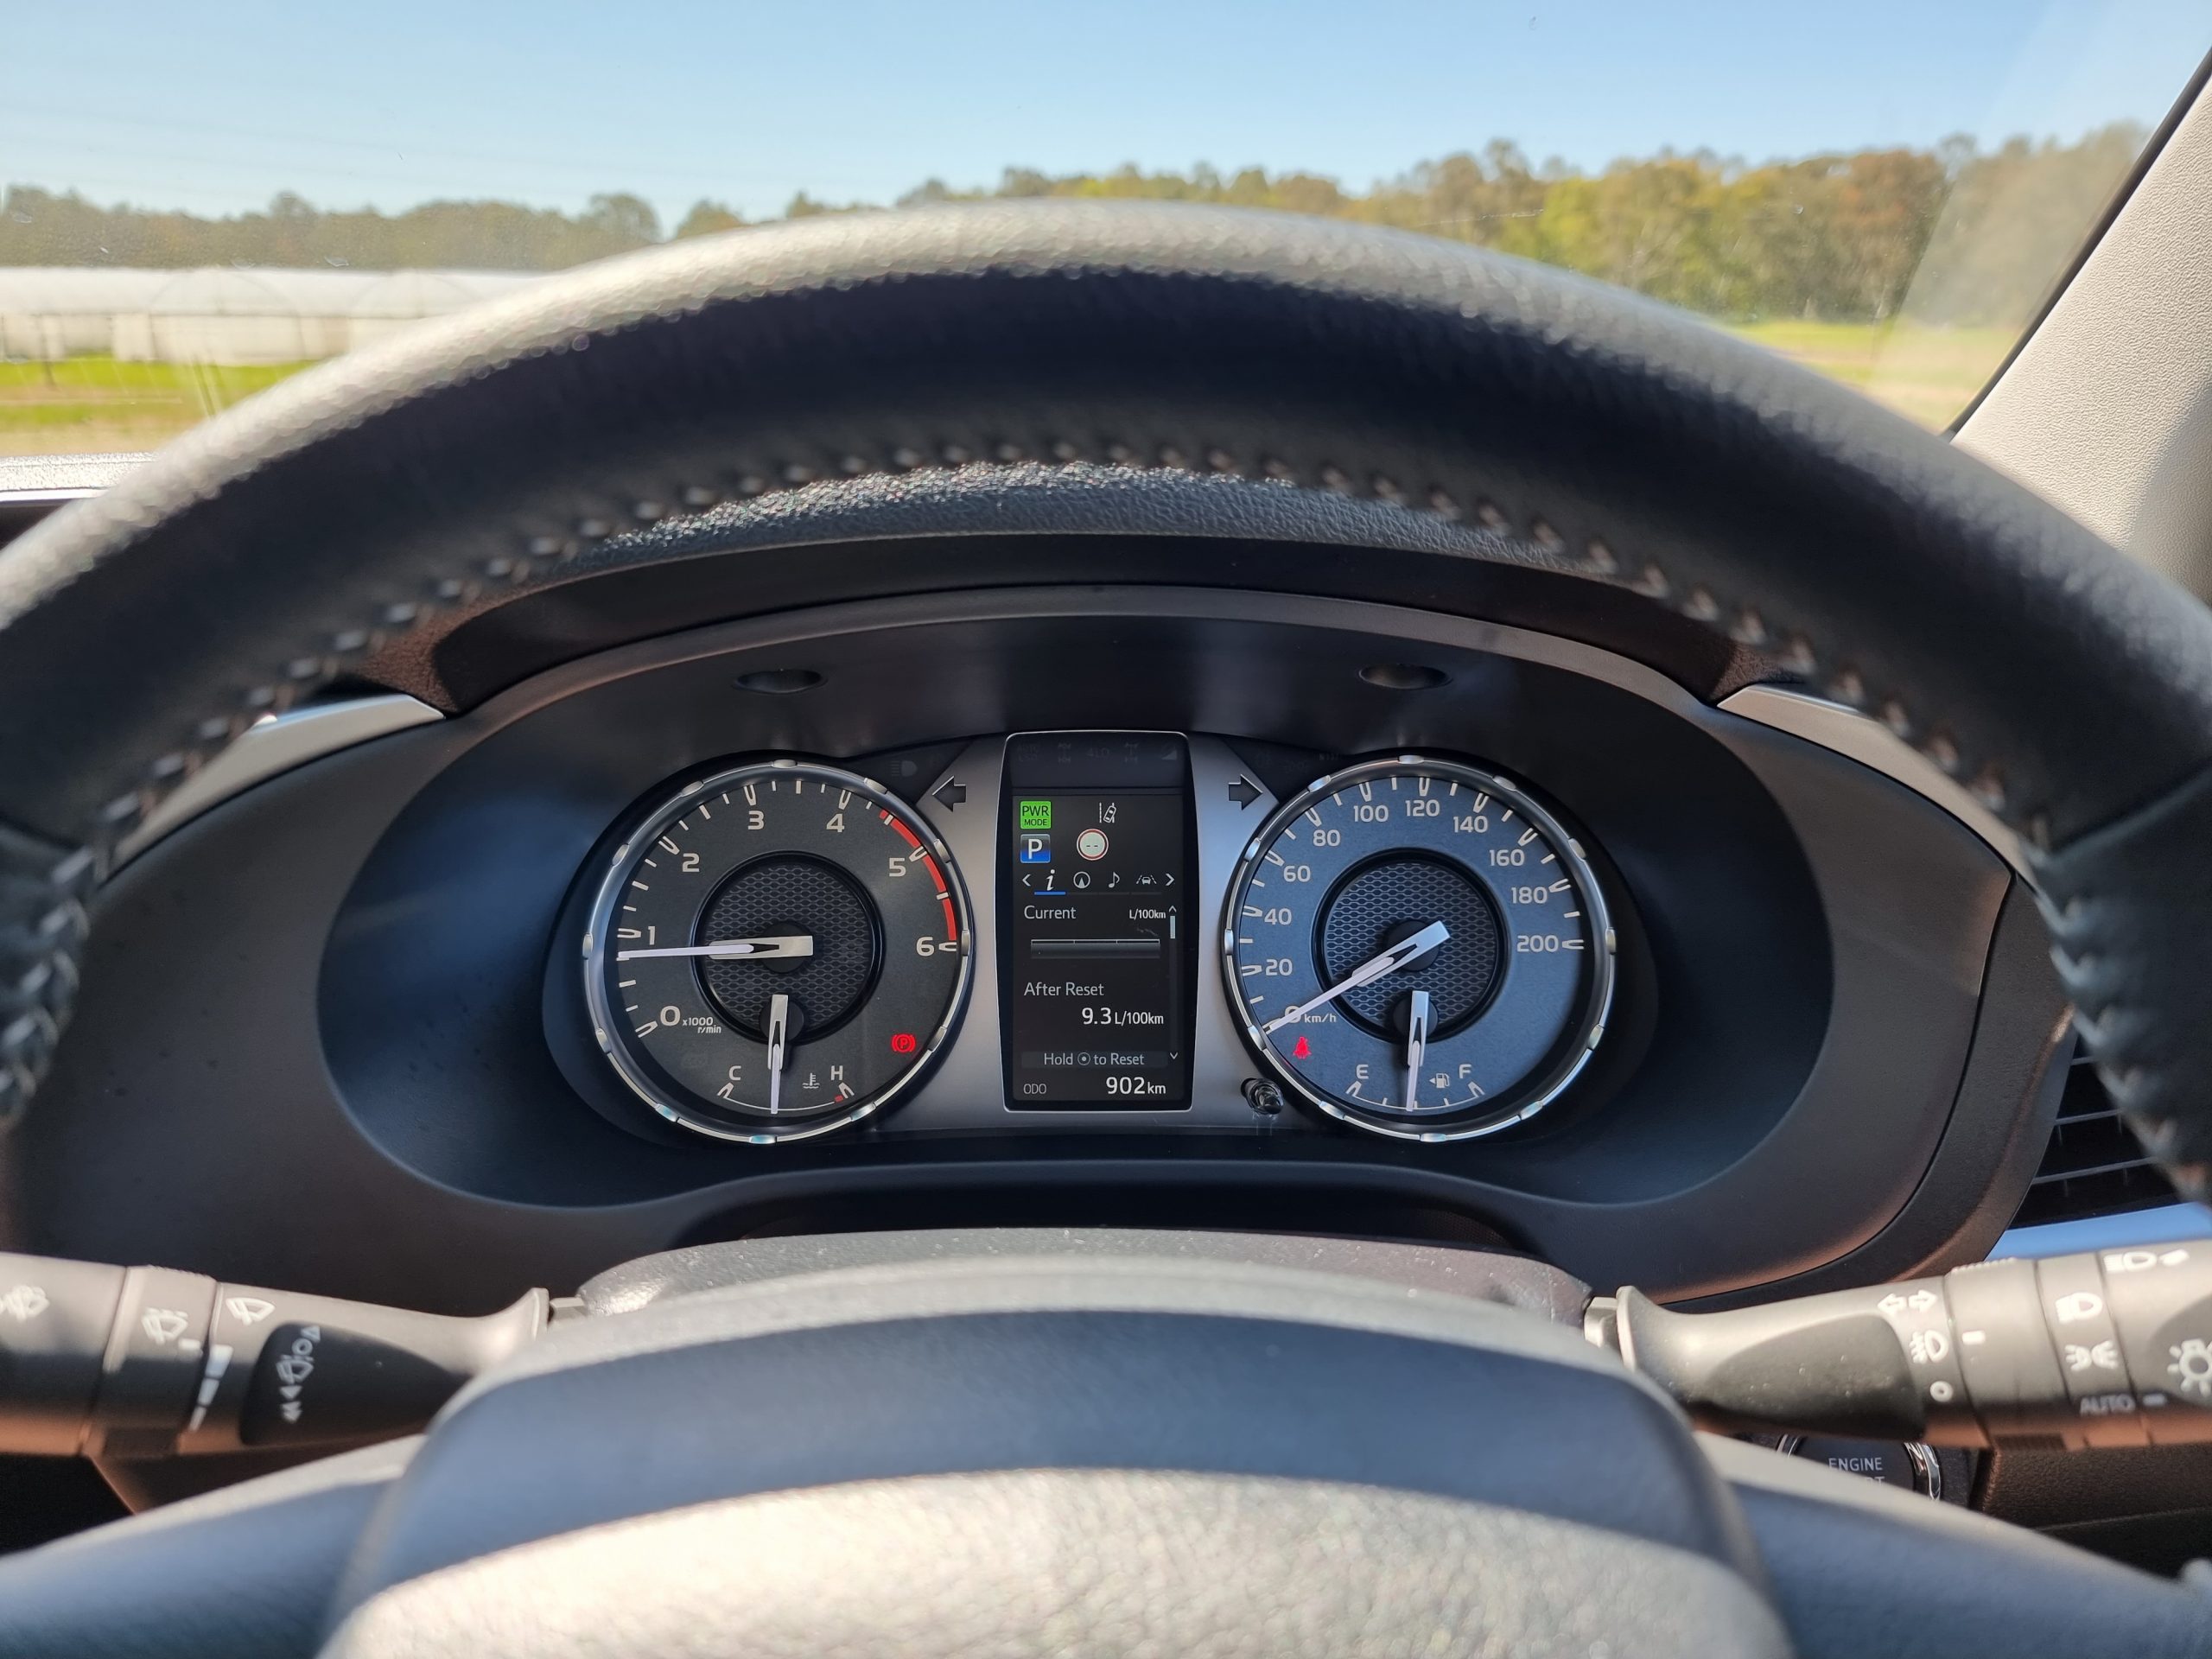 2022 Toyota HiLux SR5 interior